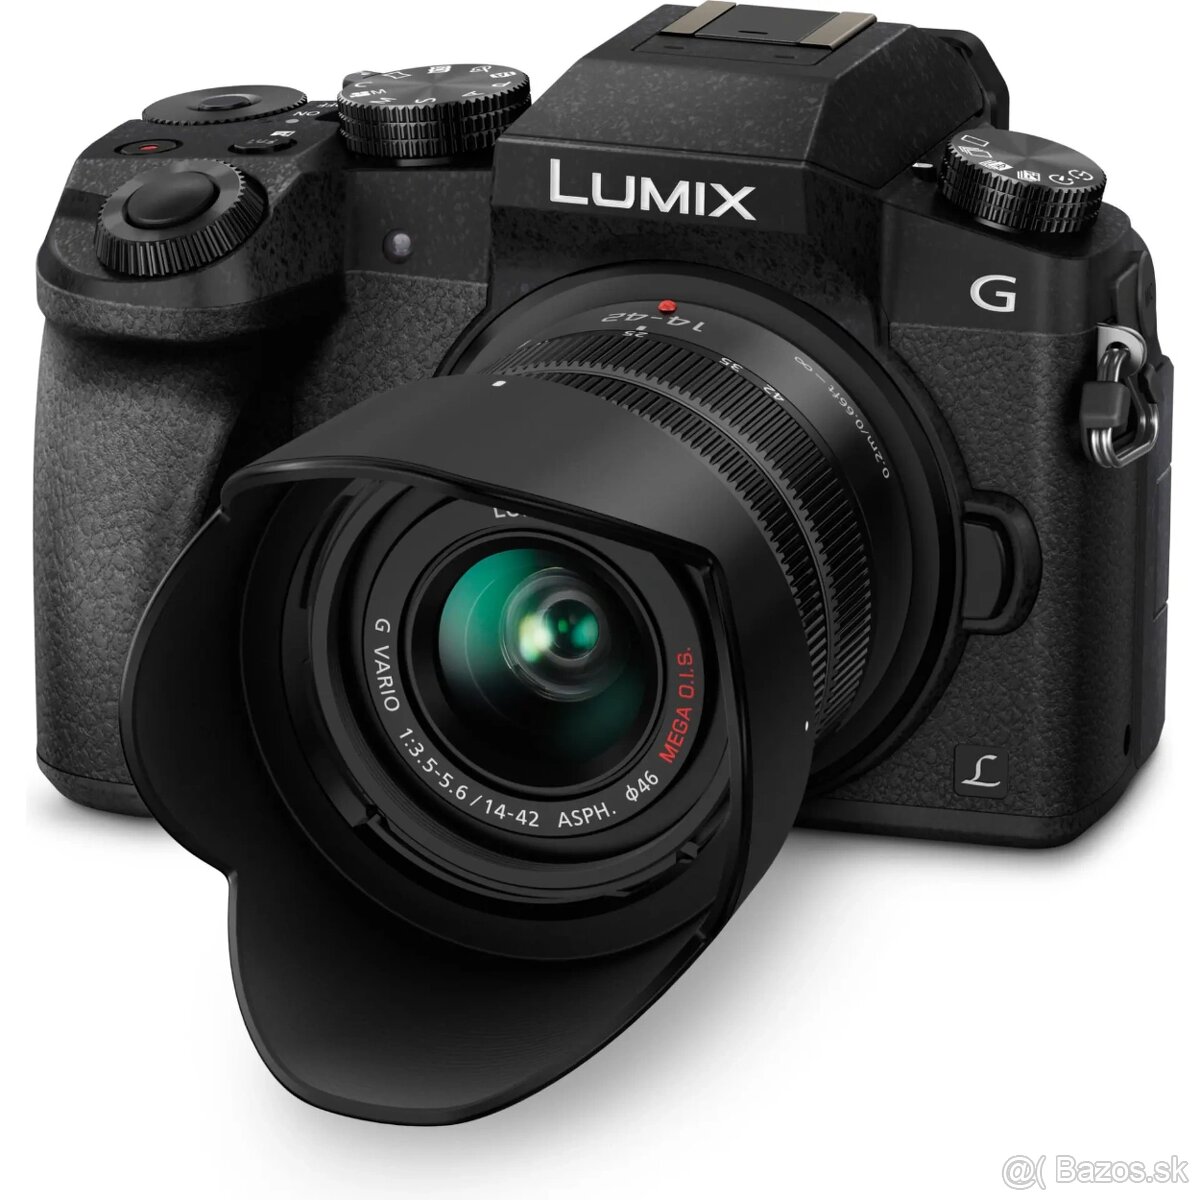 Predám Panasonic Lumix DMC-G7 vhodný na Youtube, VLOGy atd